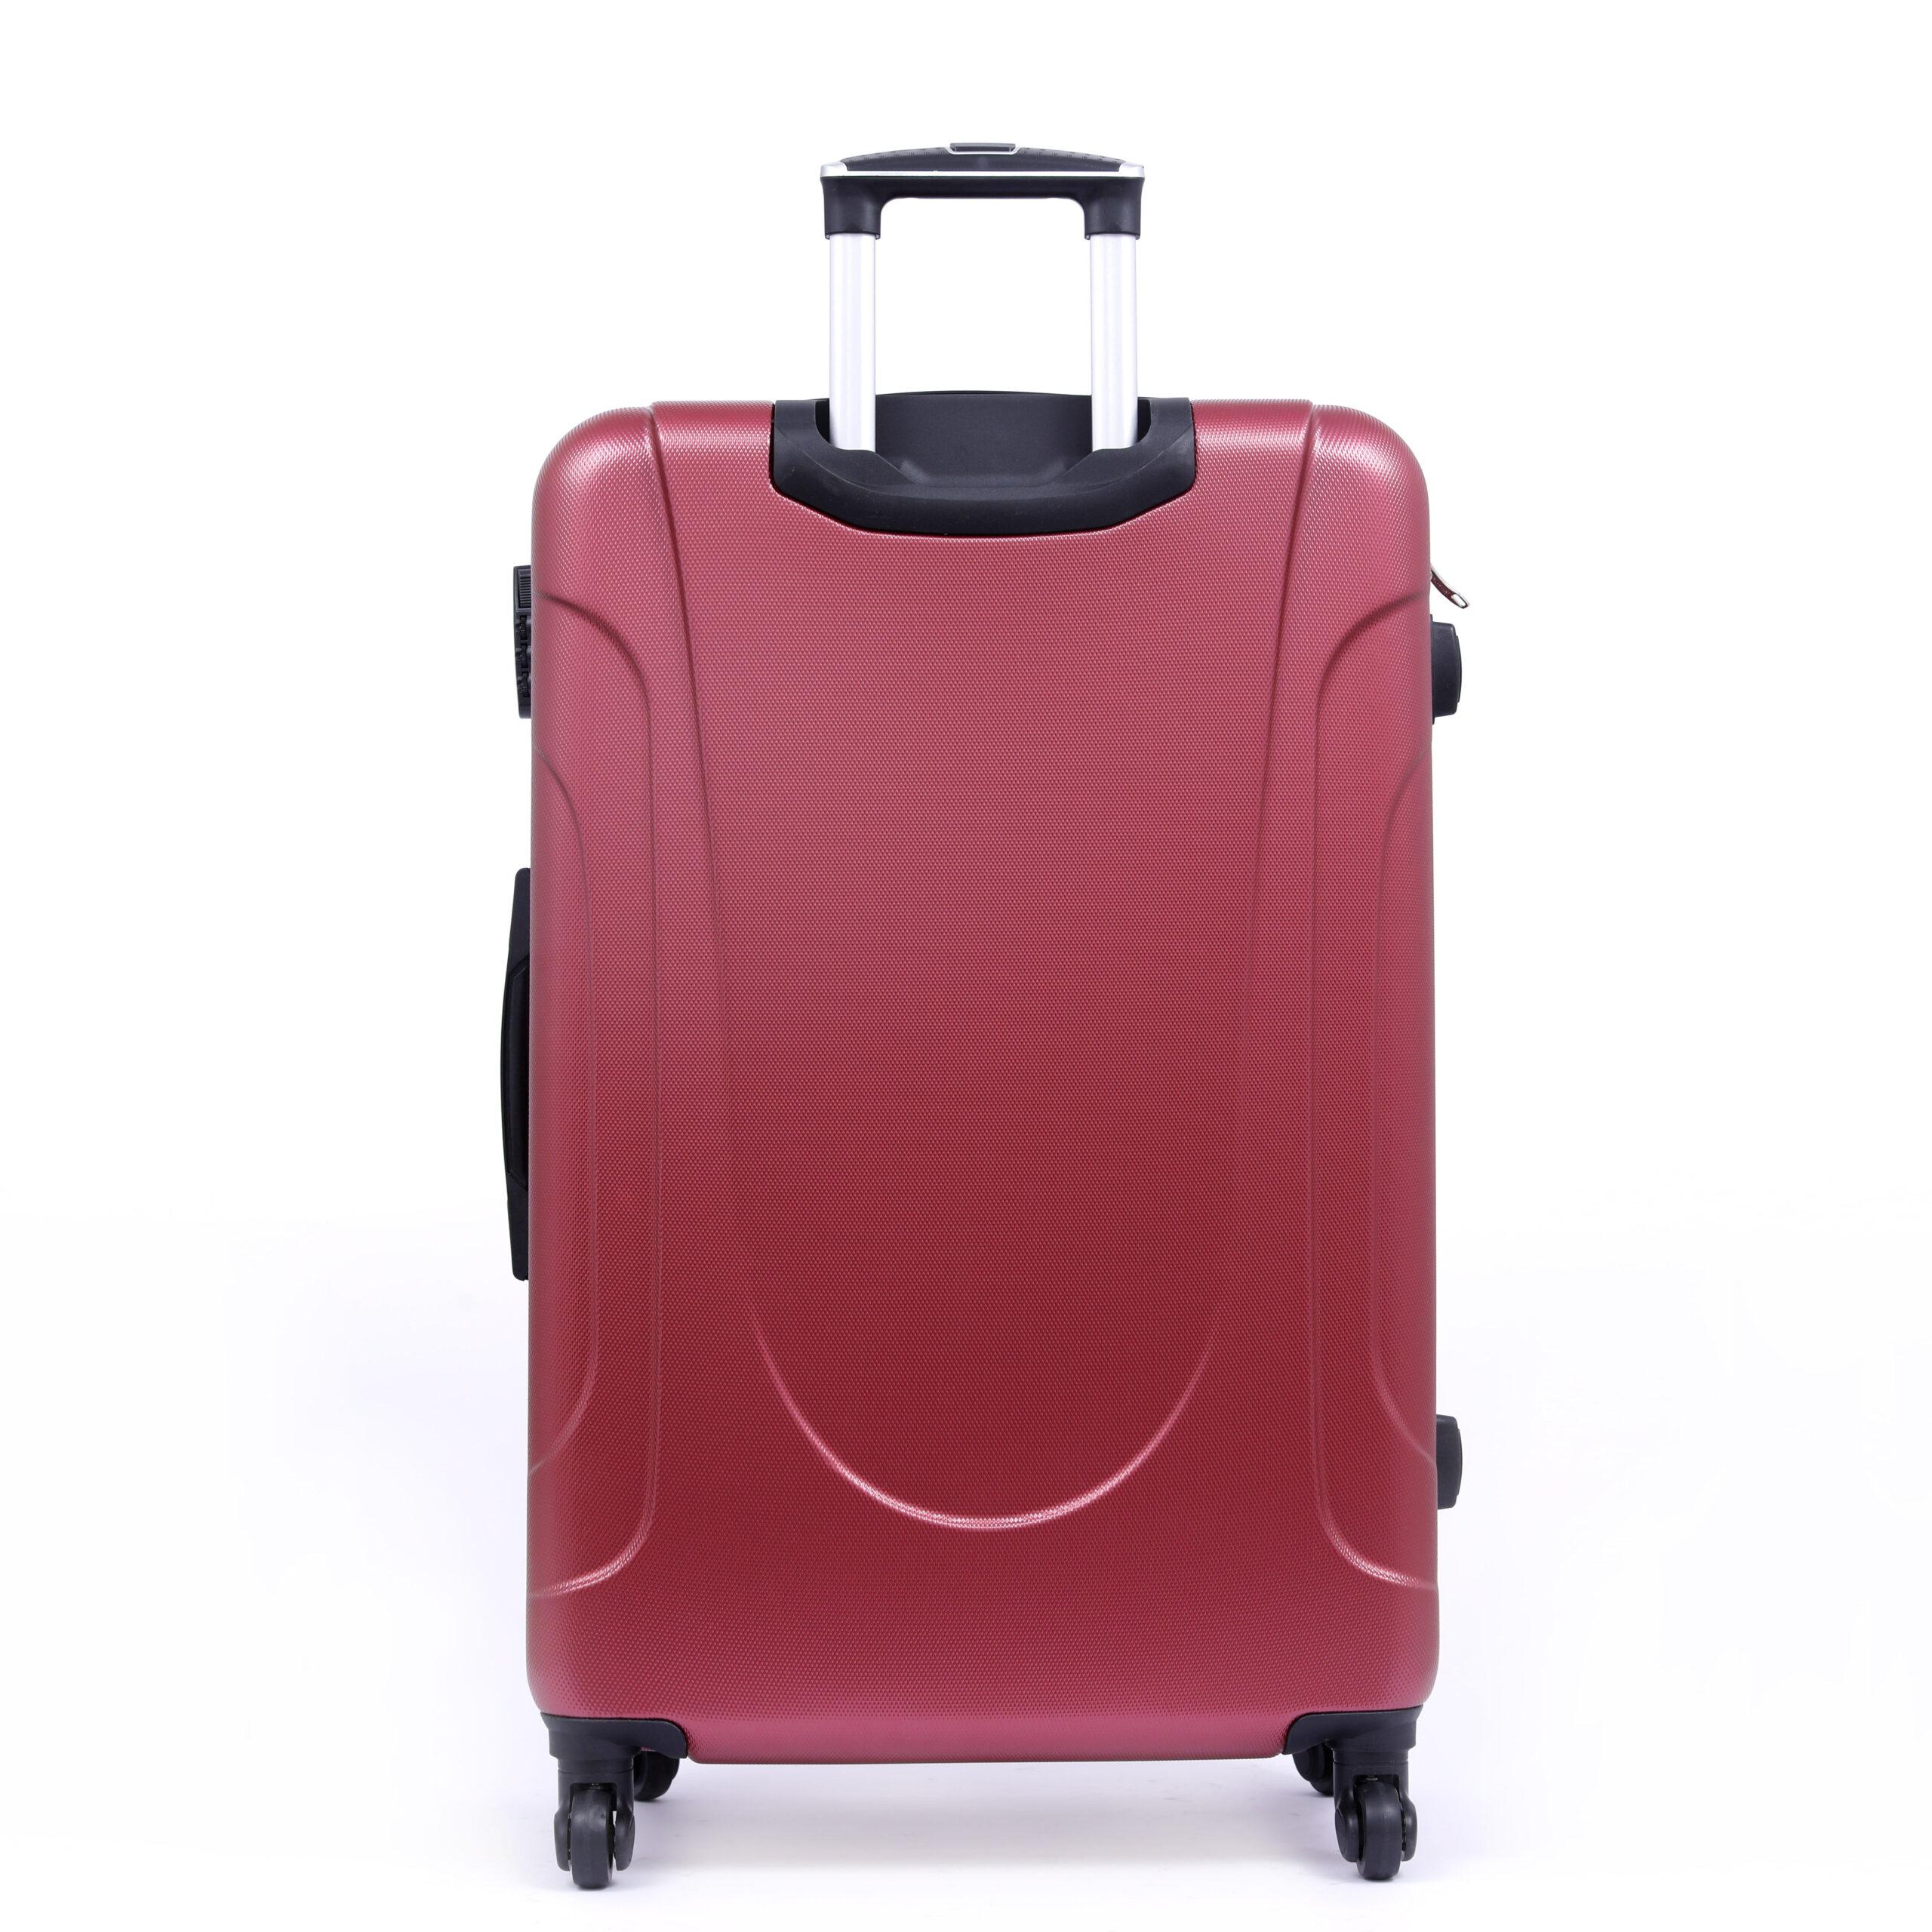 طقم حقائب سفر 3 حقائب مادة ABS بعجلات دوارة (20 ، 24 ، 28) بوصة أحمر PARA JOHN - Travel Luggage Suitcase Set of 3 -  Trolley Bag, Carry On Hand Cabin Luggage Bag (20 ، 24 ، 28) inch - cG9zdDo0MzgwODc=